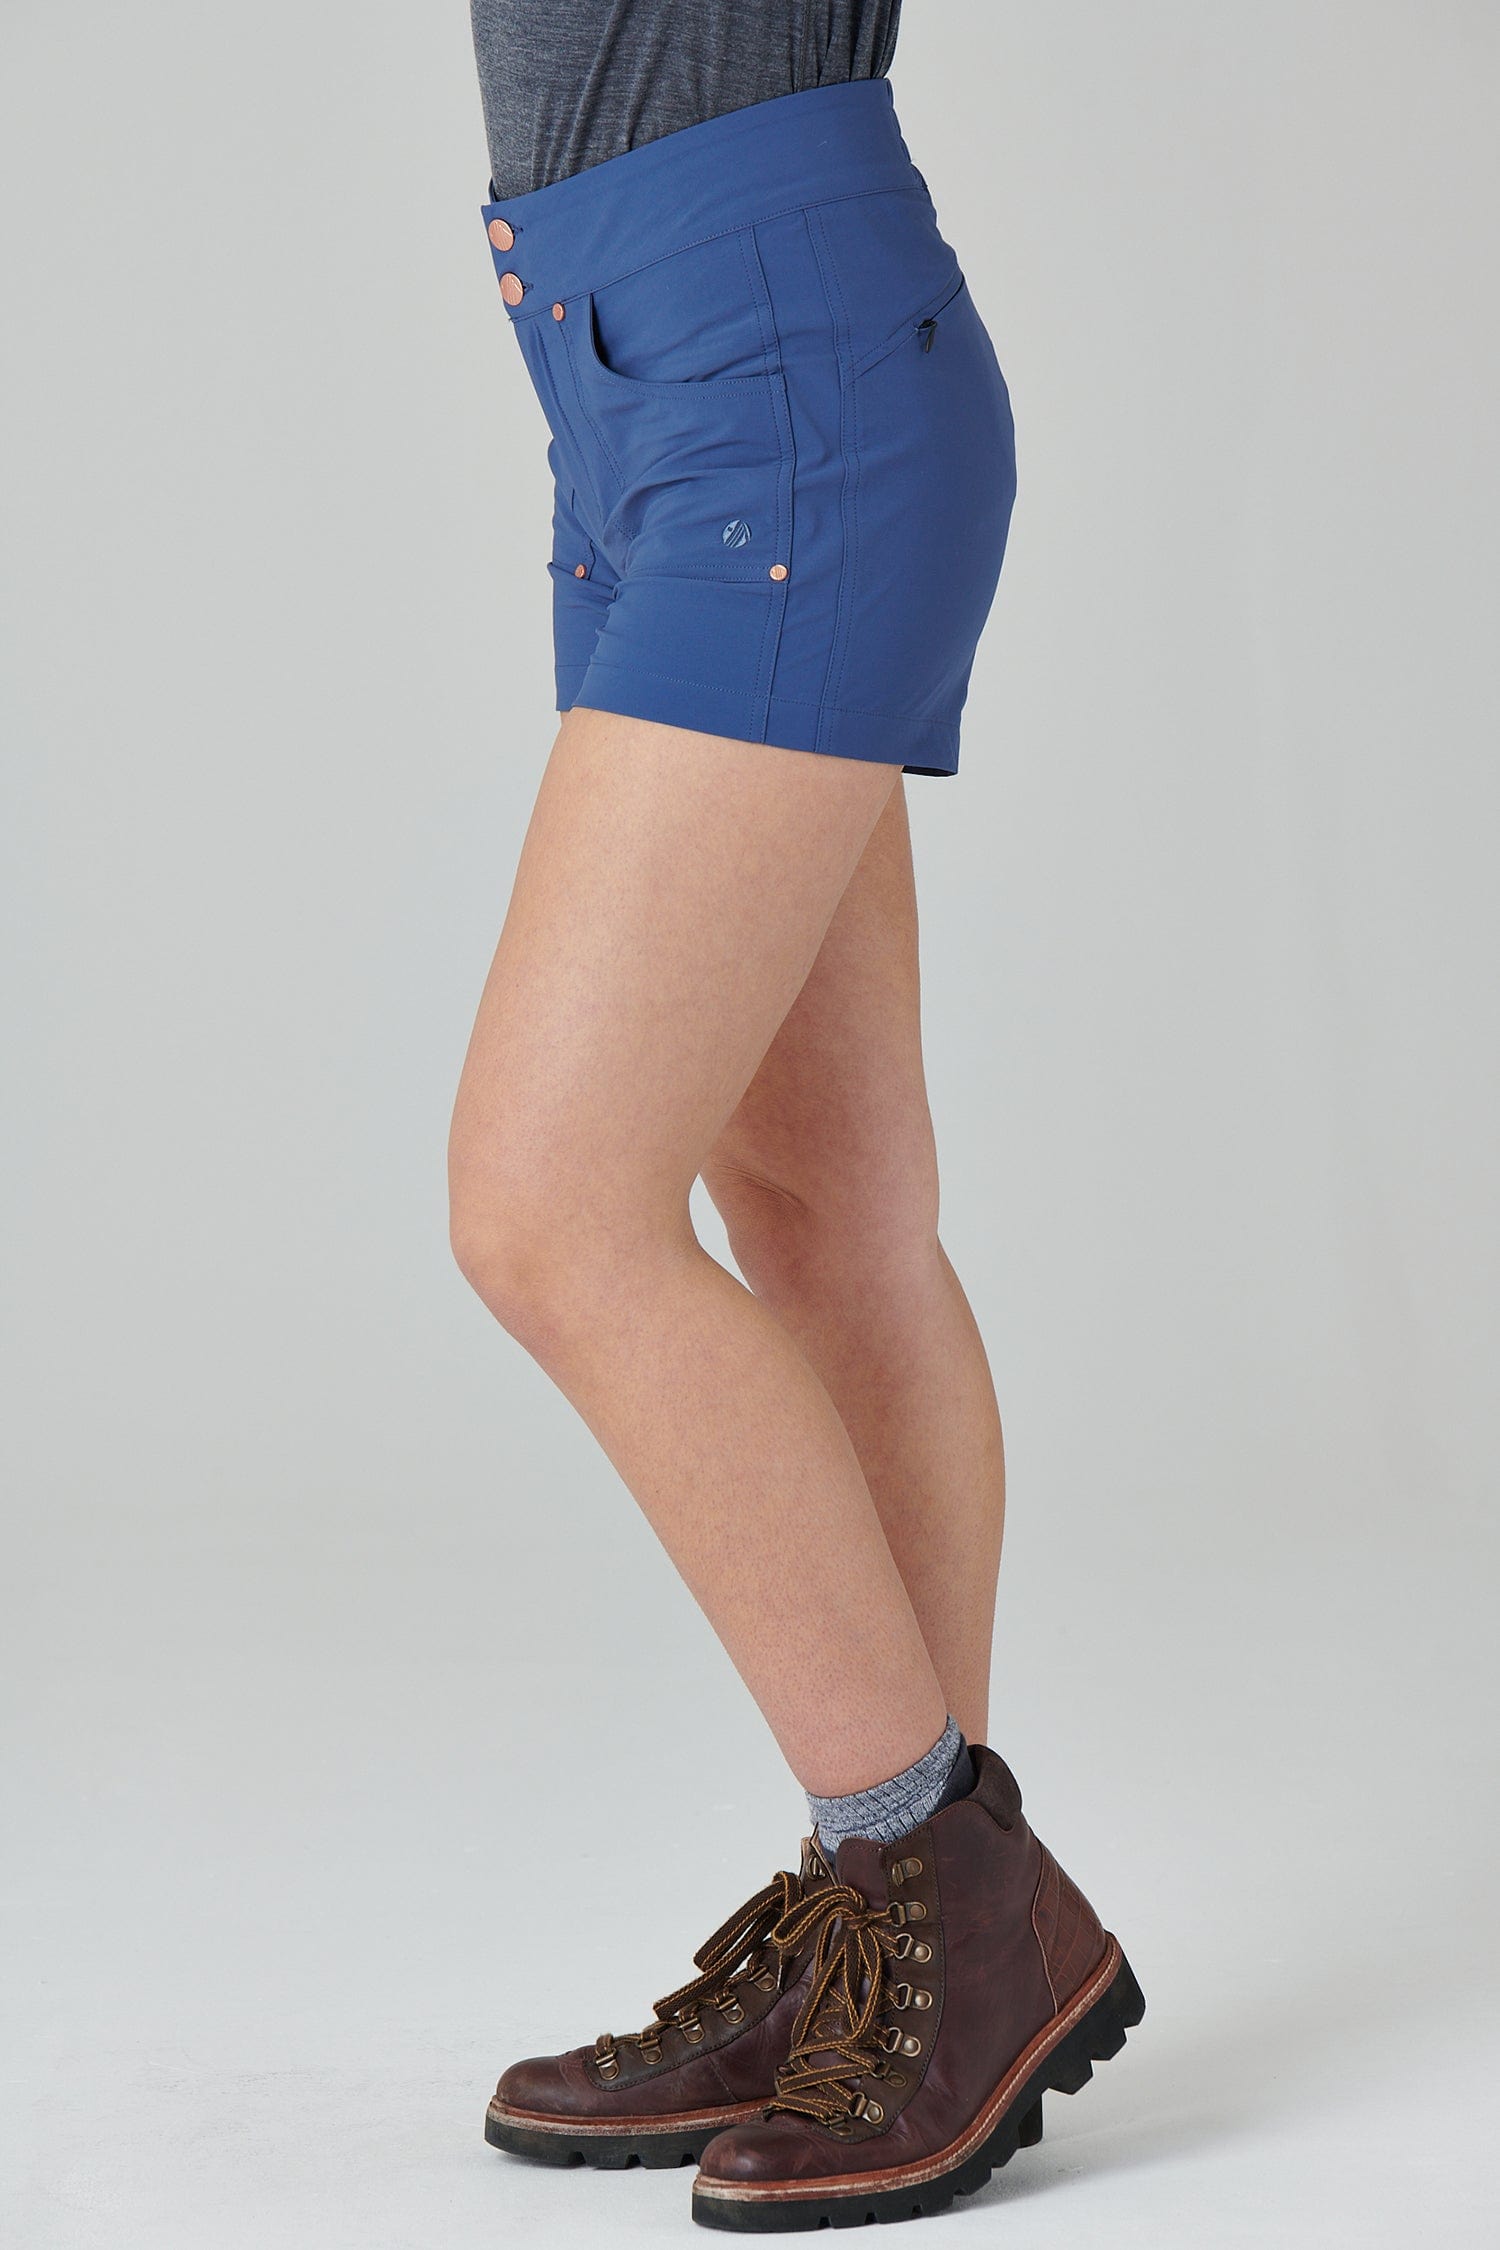 Trek Shorts - Steel Blue - 26 / Uk8 - Womens - Acai Outdoorwear